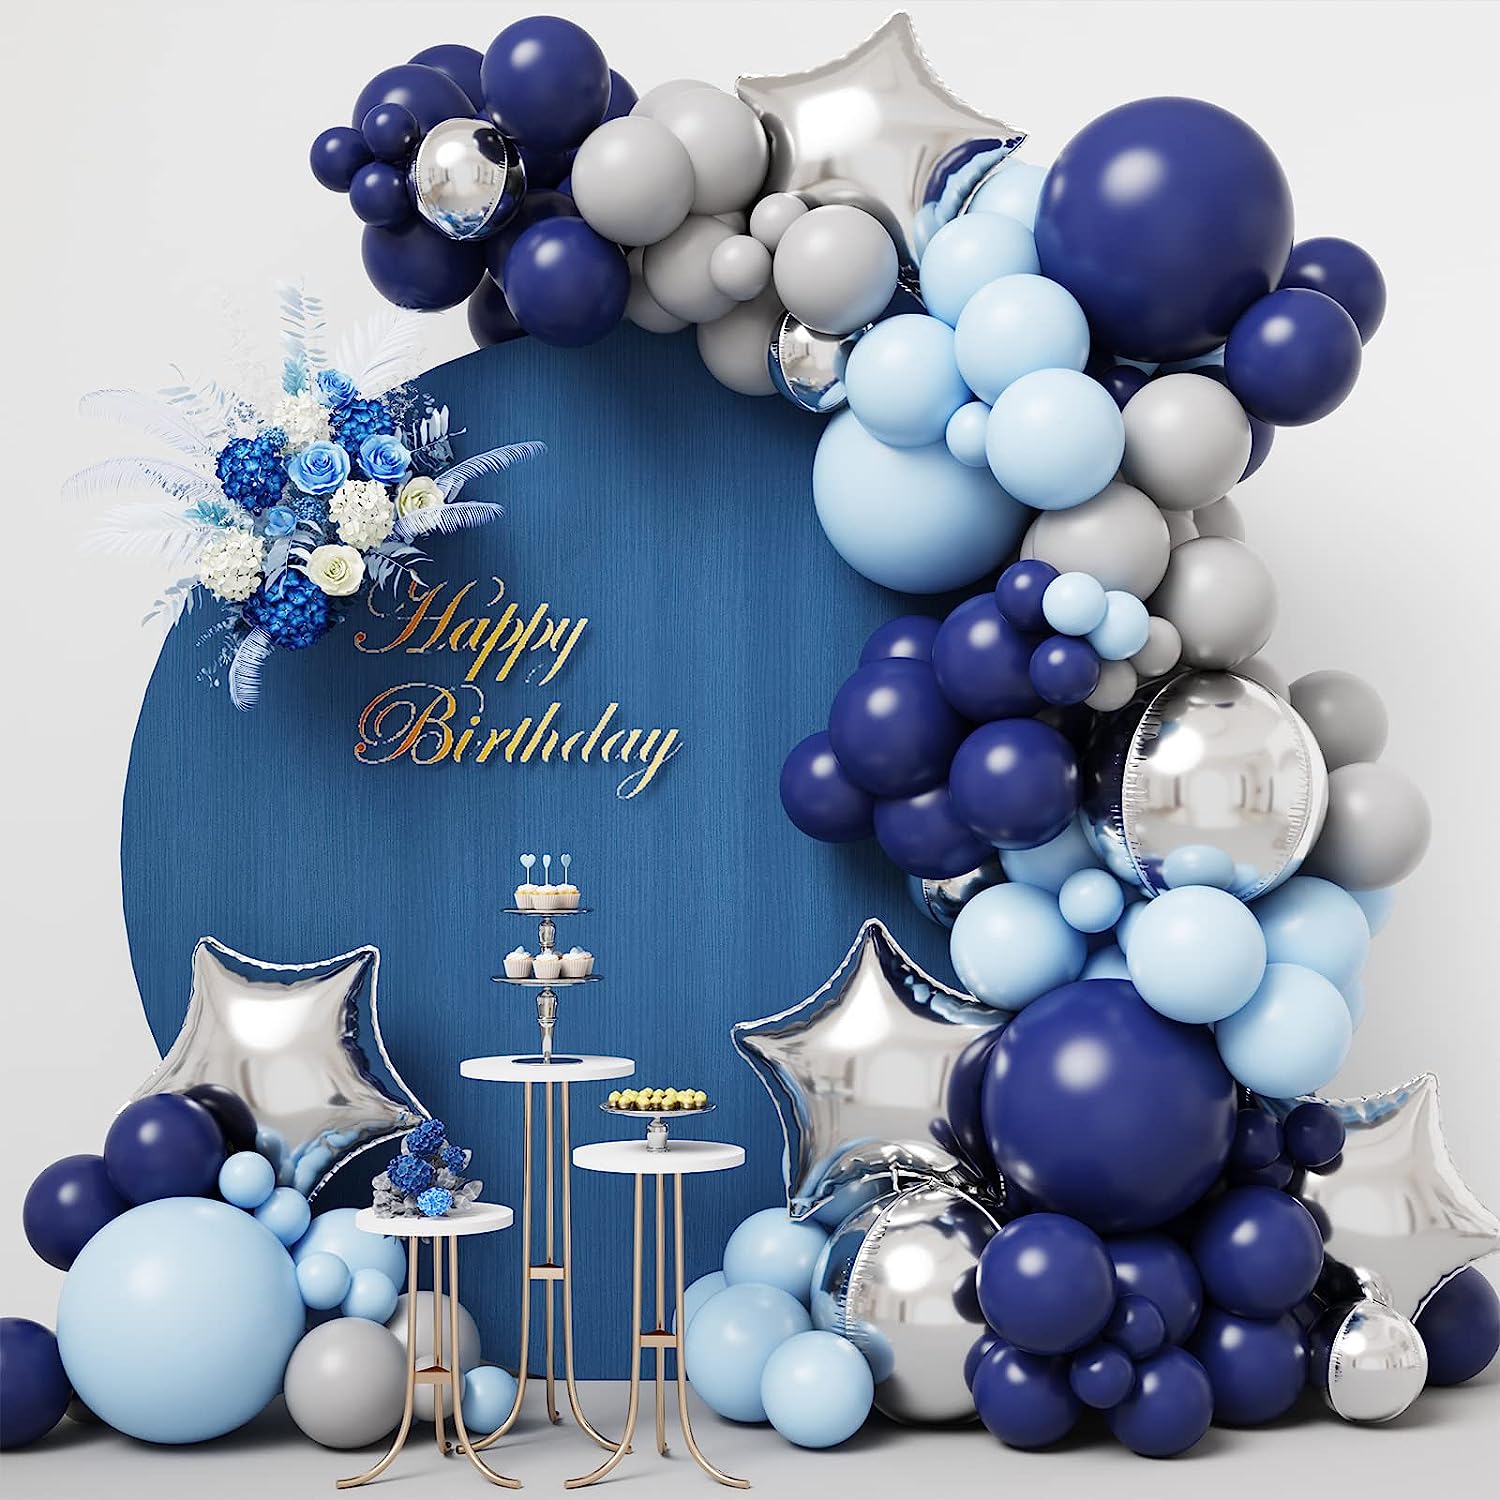 X017: 155pcs Blue Silver Balloons for Happy Birthday Wedding Anniversary Valentine&